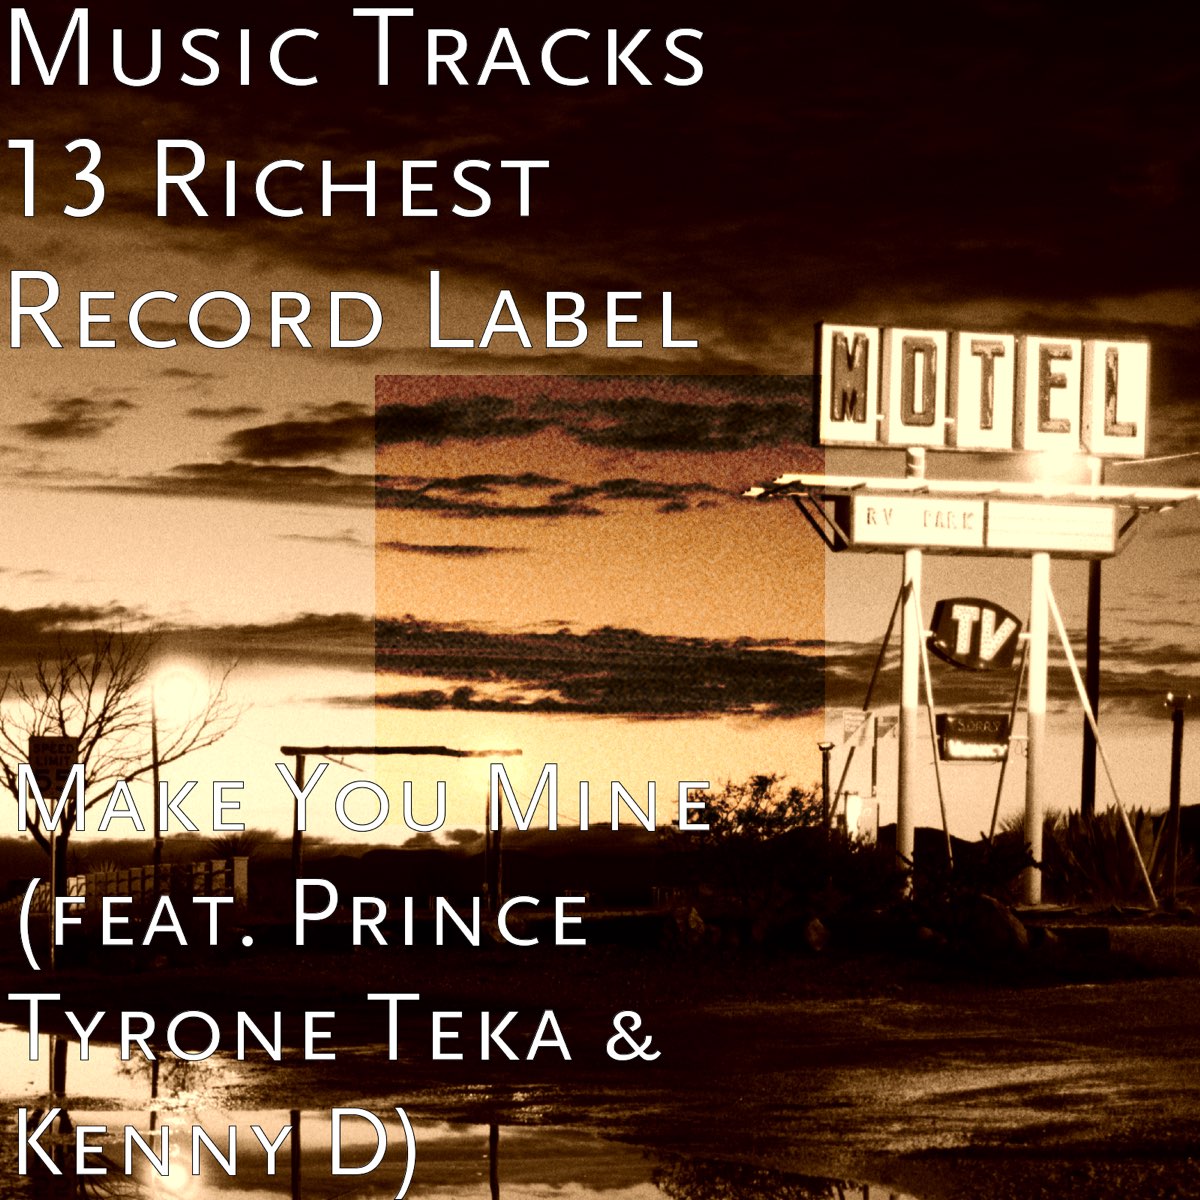 13 tracks